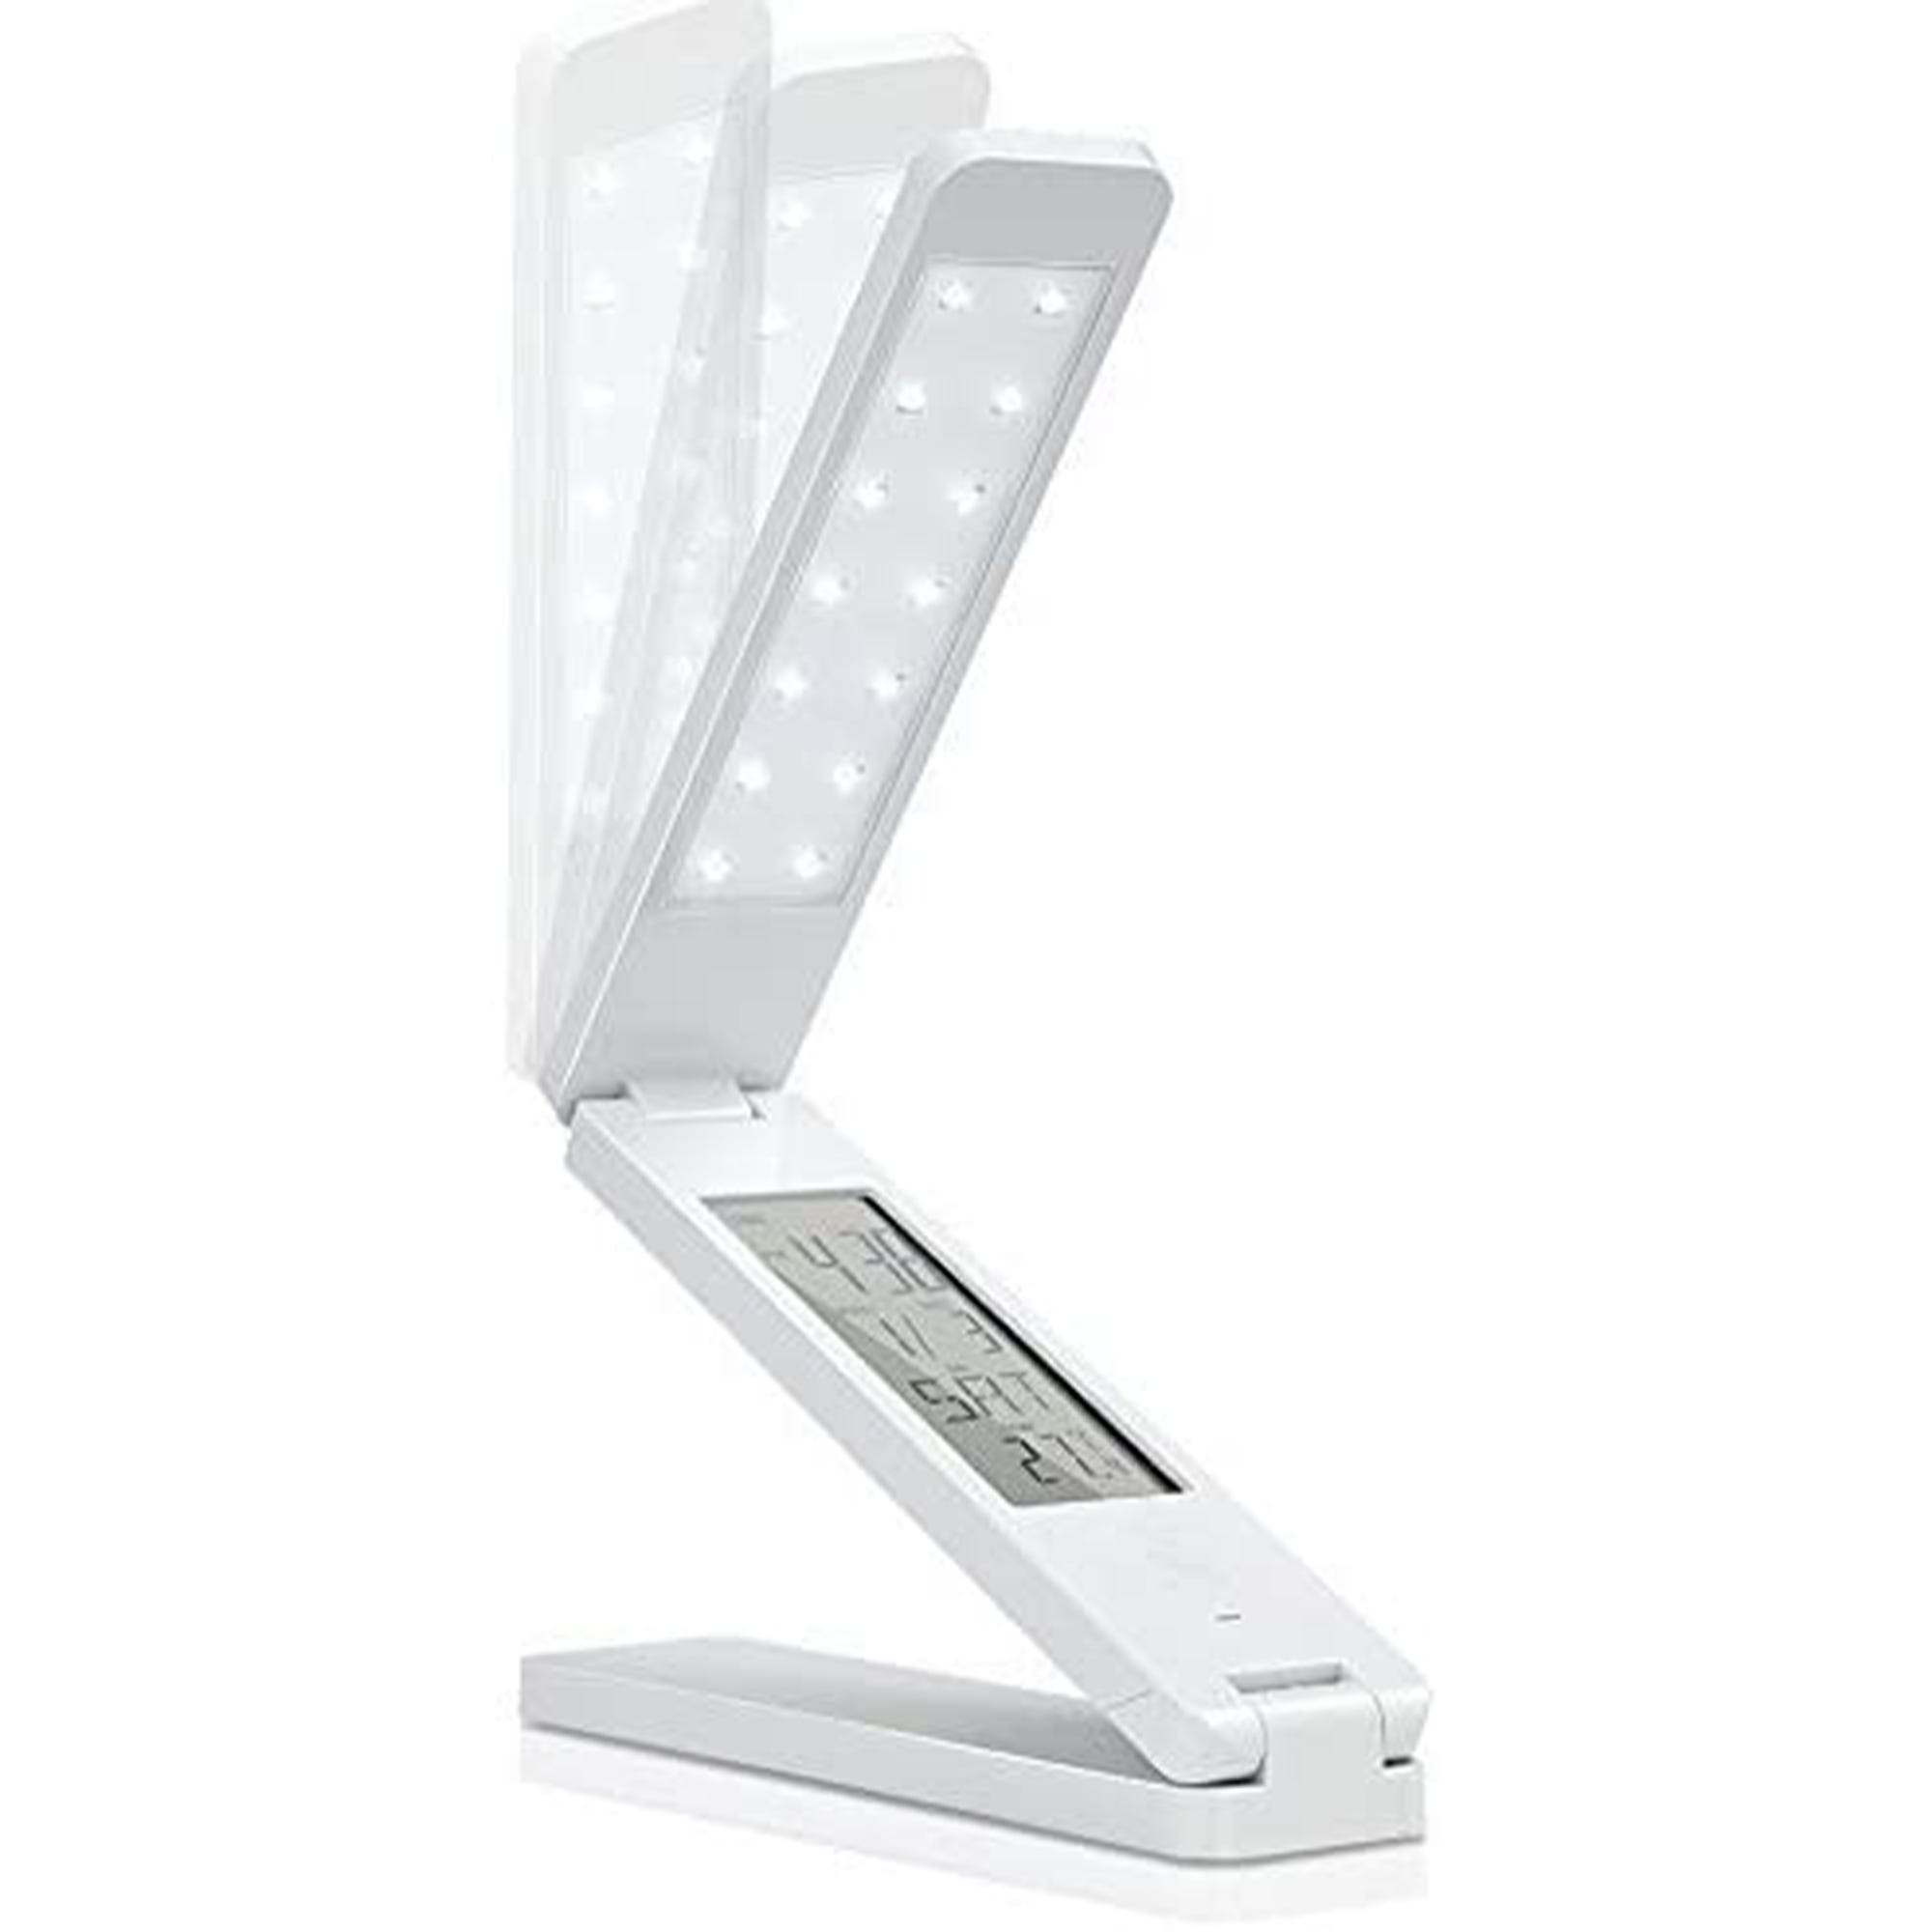 FISHTEC Lampe Portative Modulable 18 LED - Lumiere du Jour +